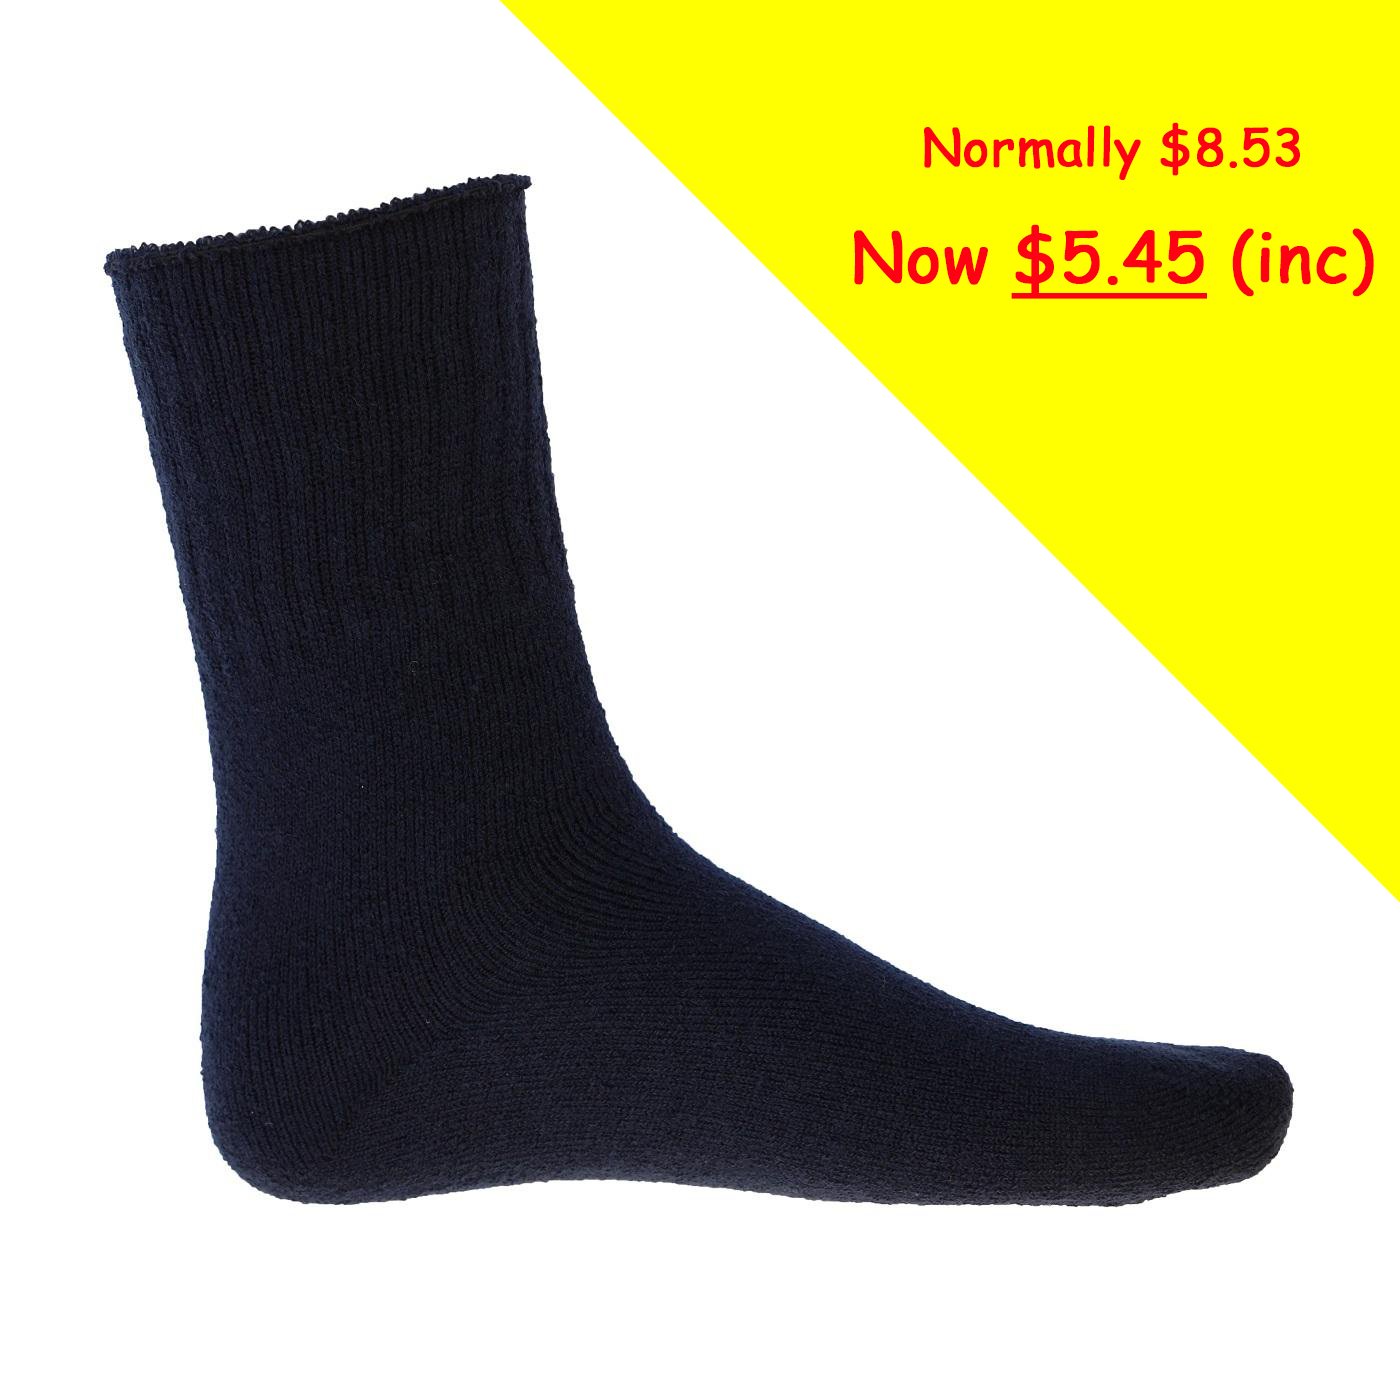 S122 Acrylic Socks (size 6-11) 3 Pack